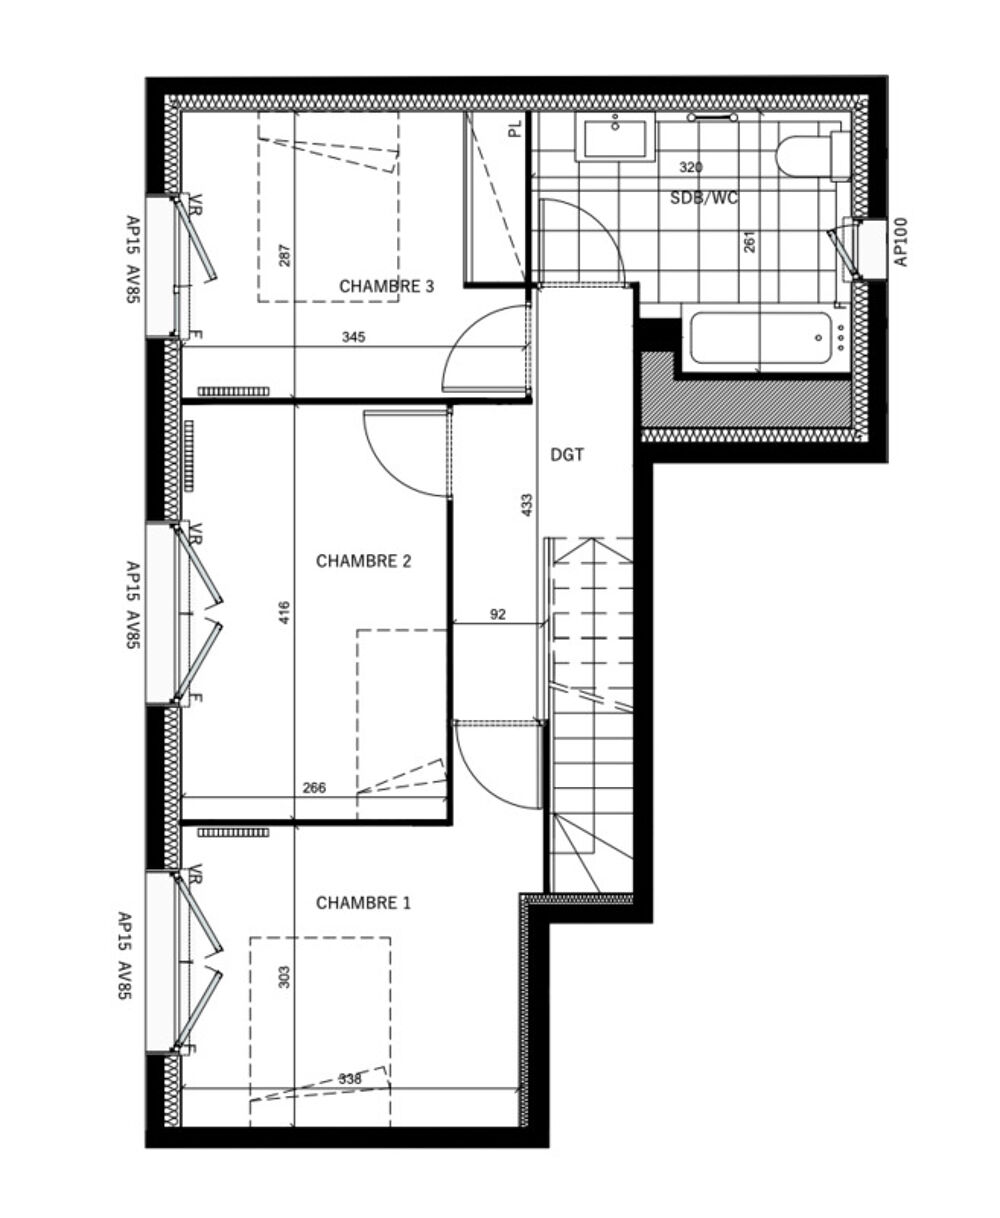 Vente Appartement COLOMBES  Beau duplex 4 pices  91,5 m - TERRASSE - PARKING Colombes